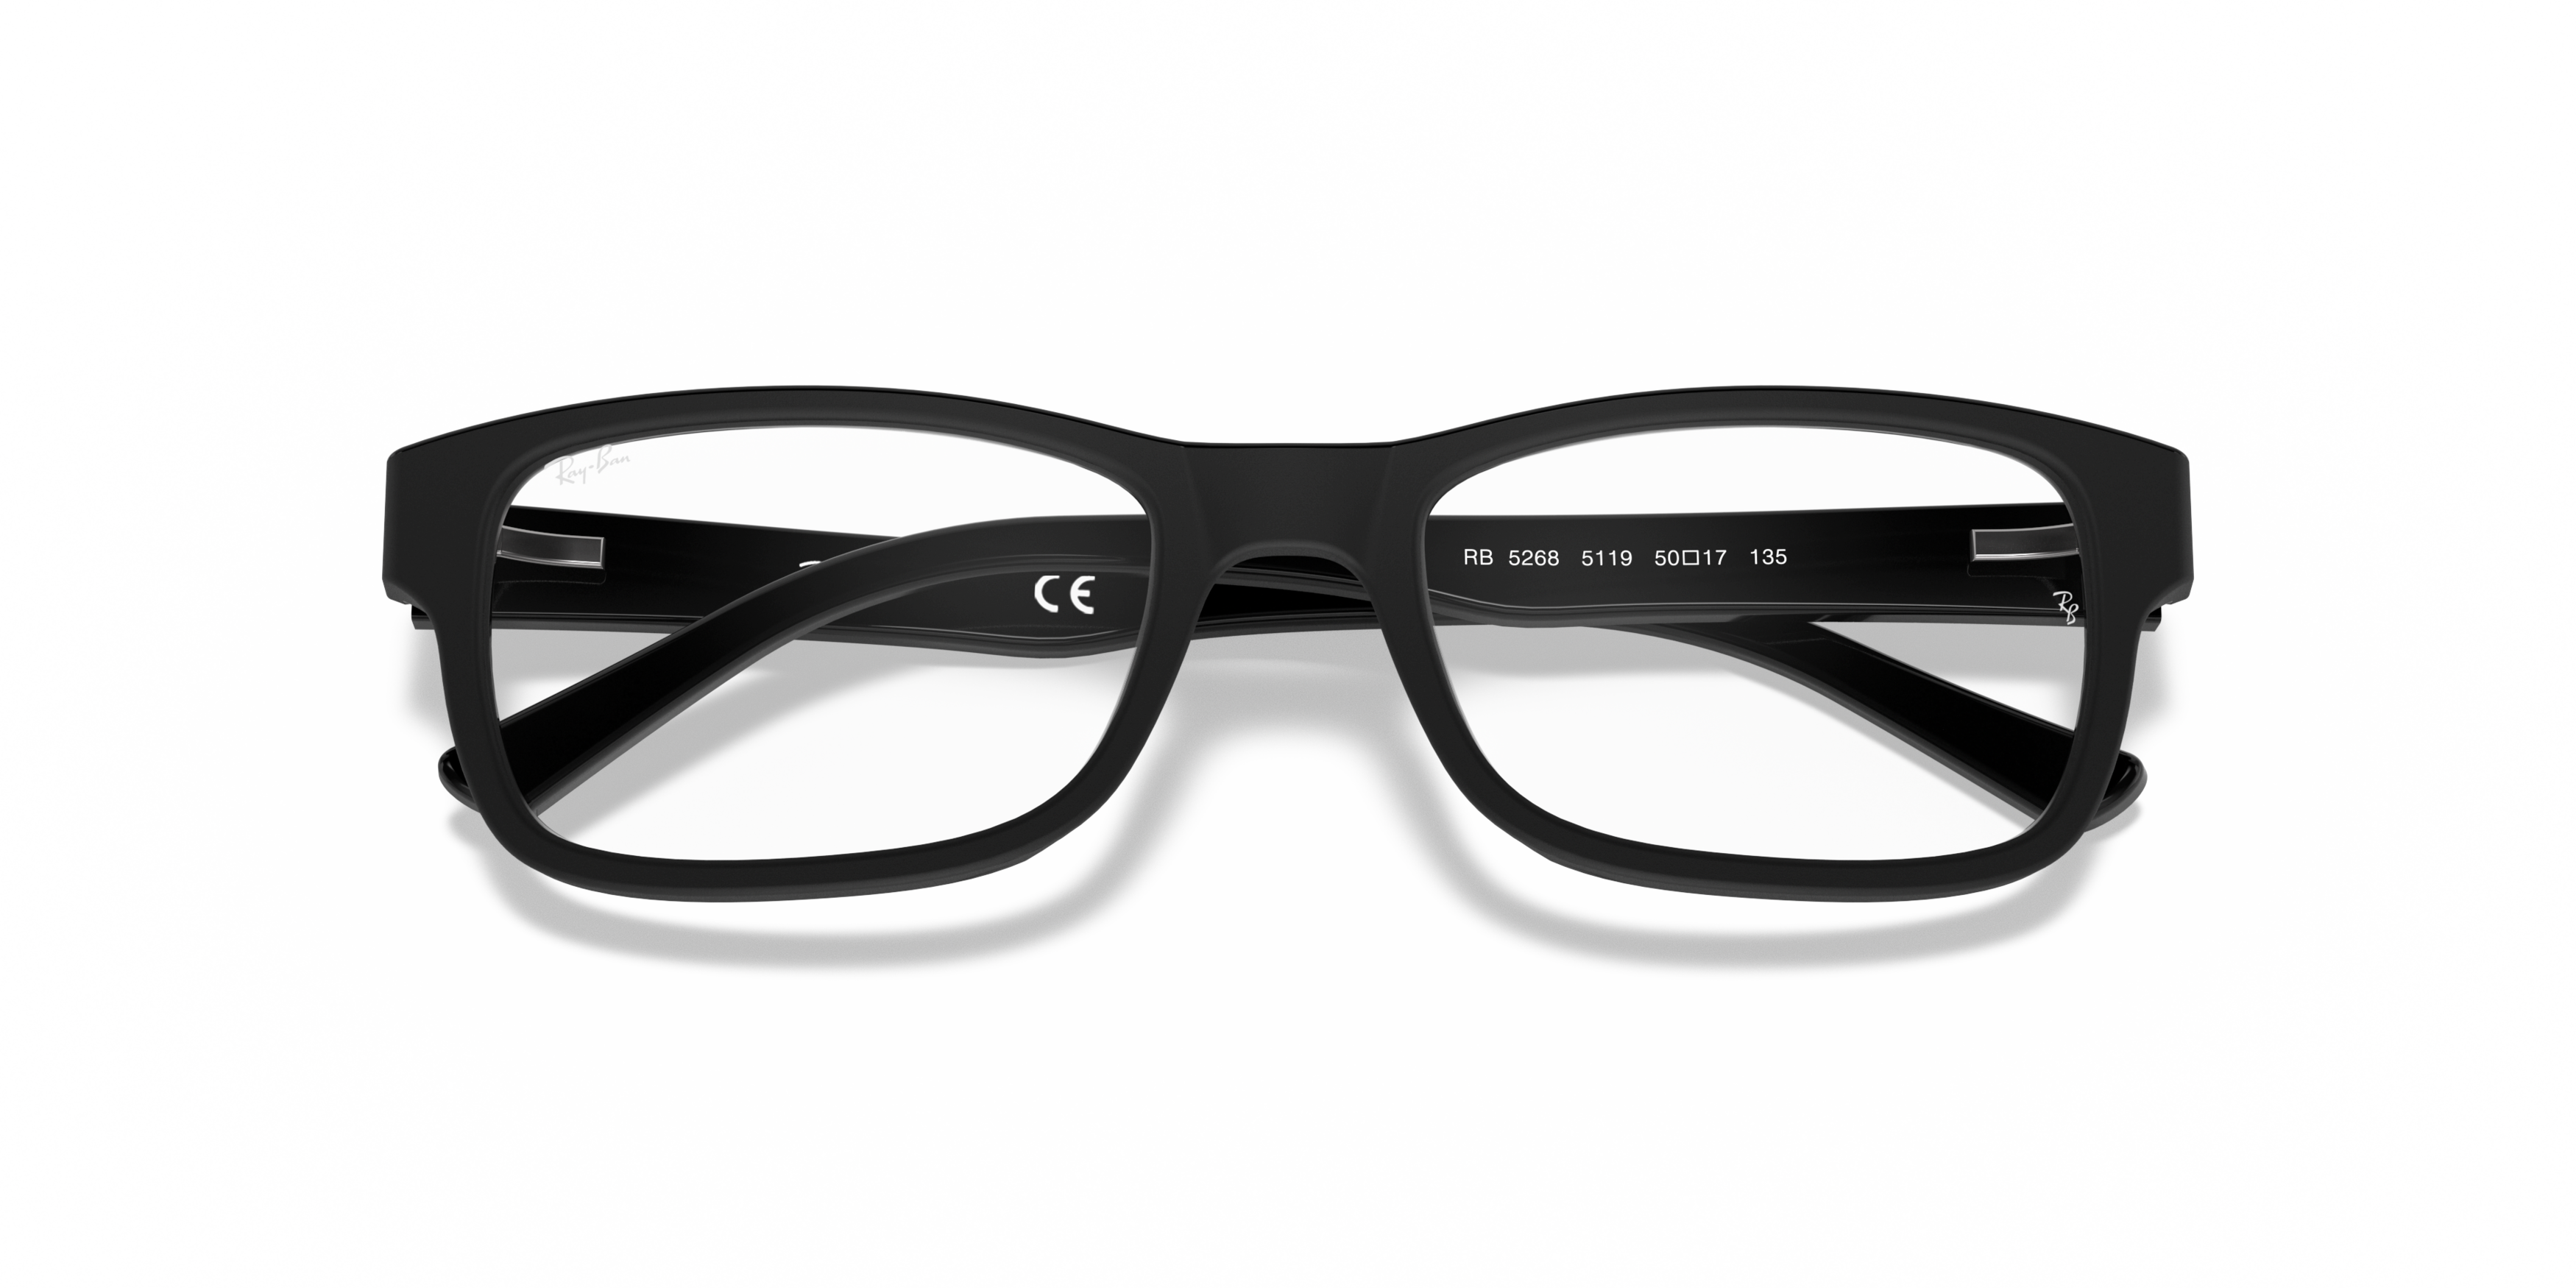 Folded Ray-Ban RX 5268 (5119) Glasses Transparent / Black